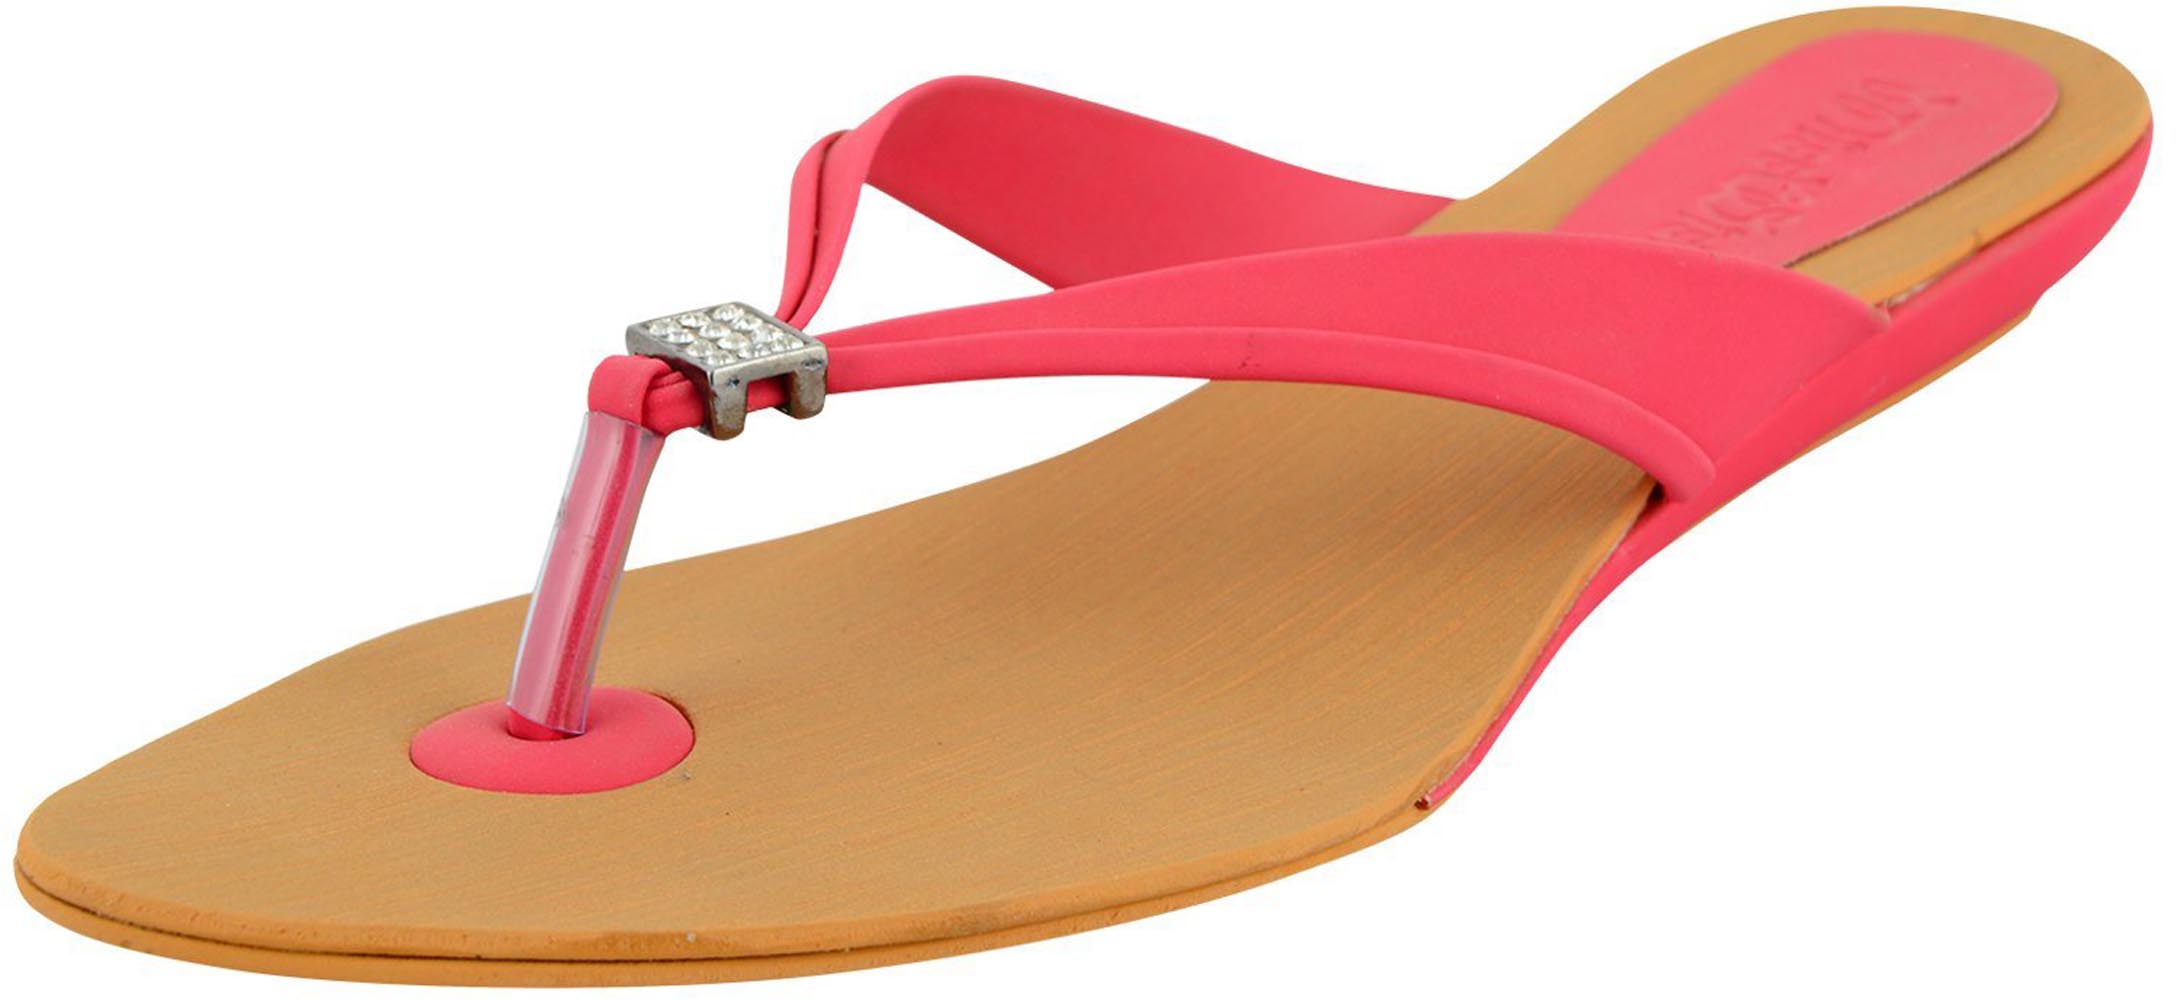 Buy Footgear Sandals(L-SA-C-6) Online @ ₹1499 from ShopClues